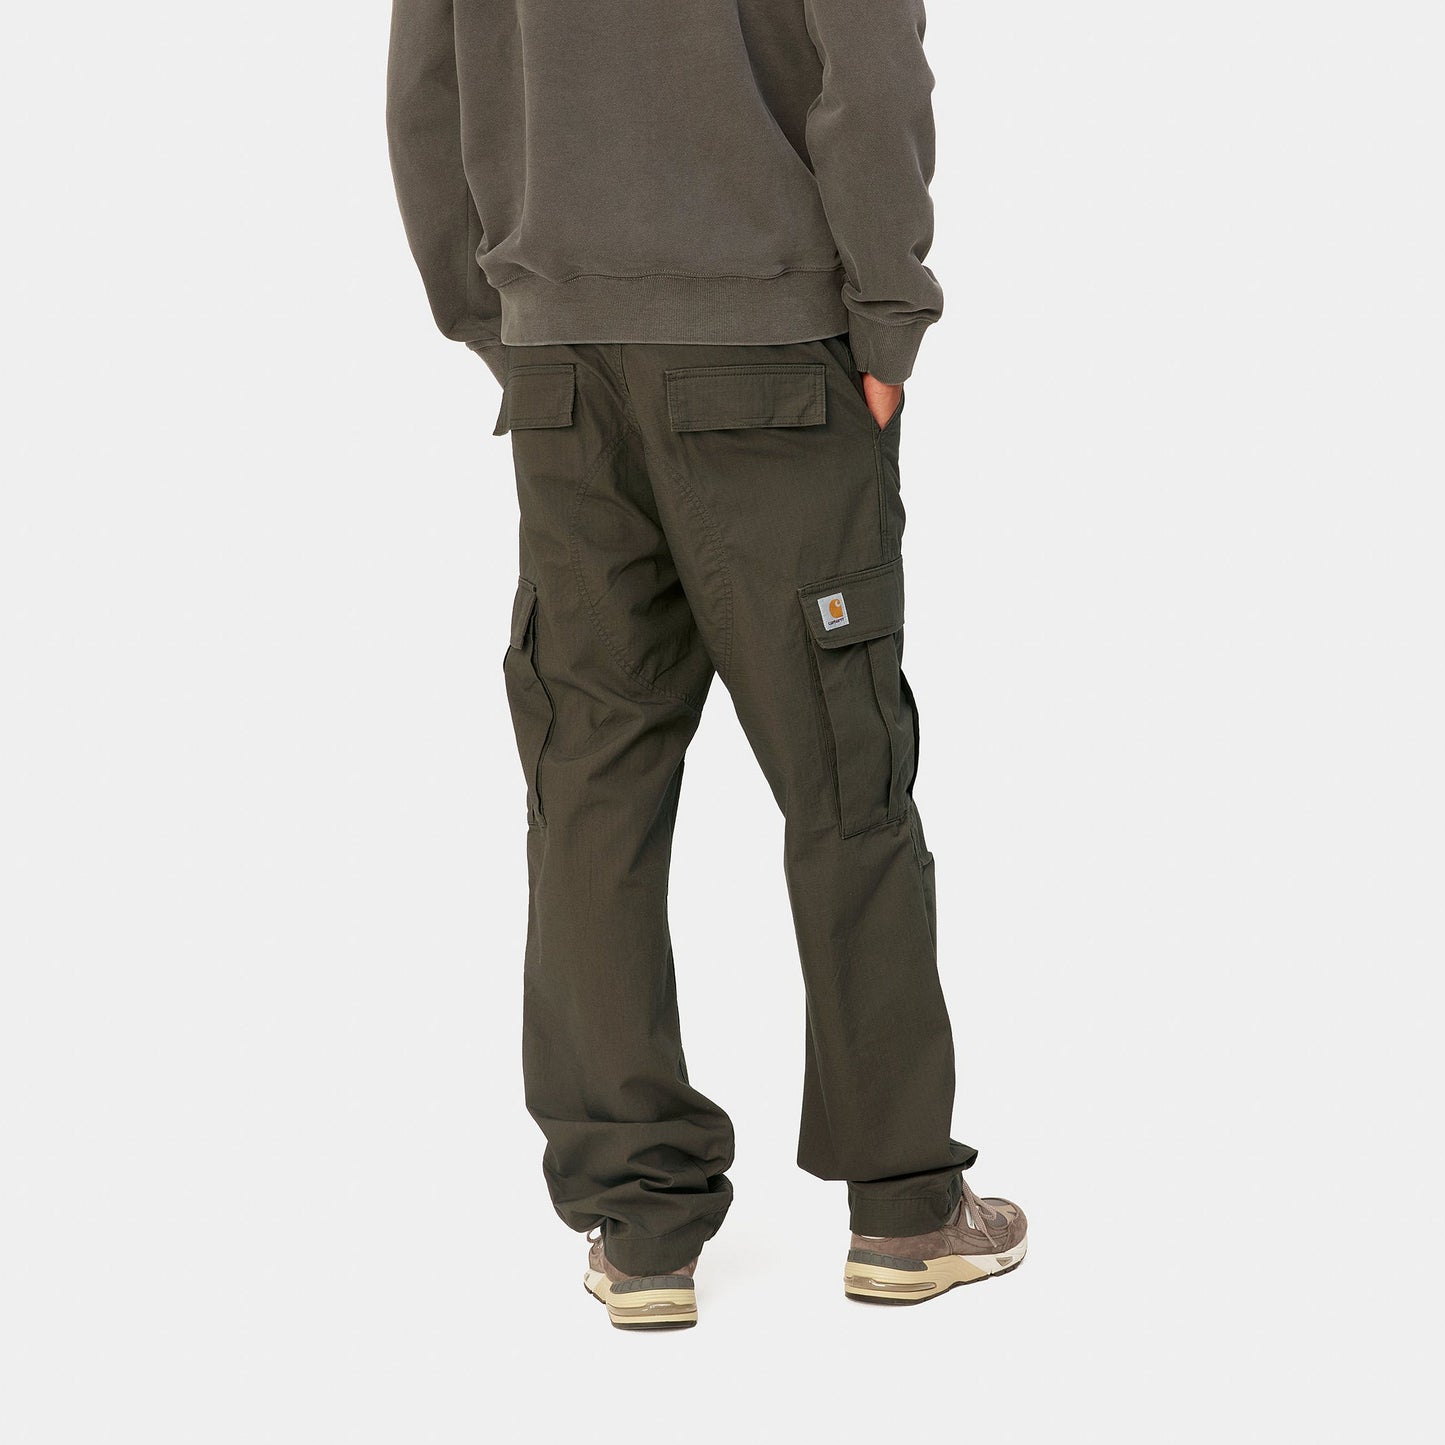 Pantalone Carhartt Wip Cypress da Uomo i032467